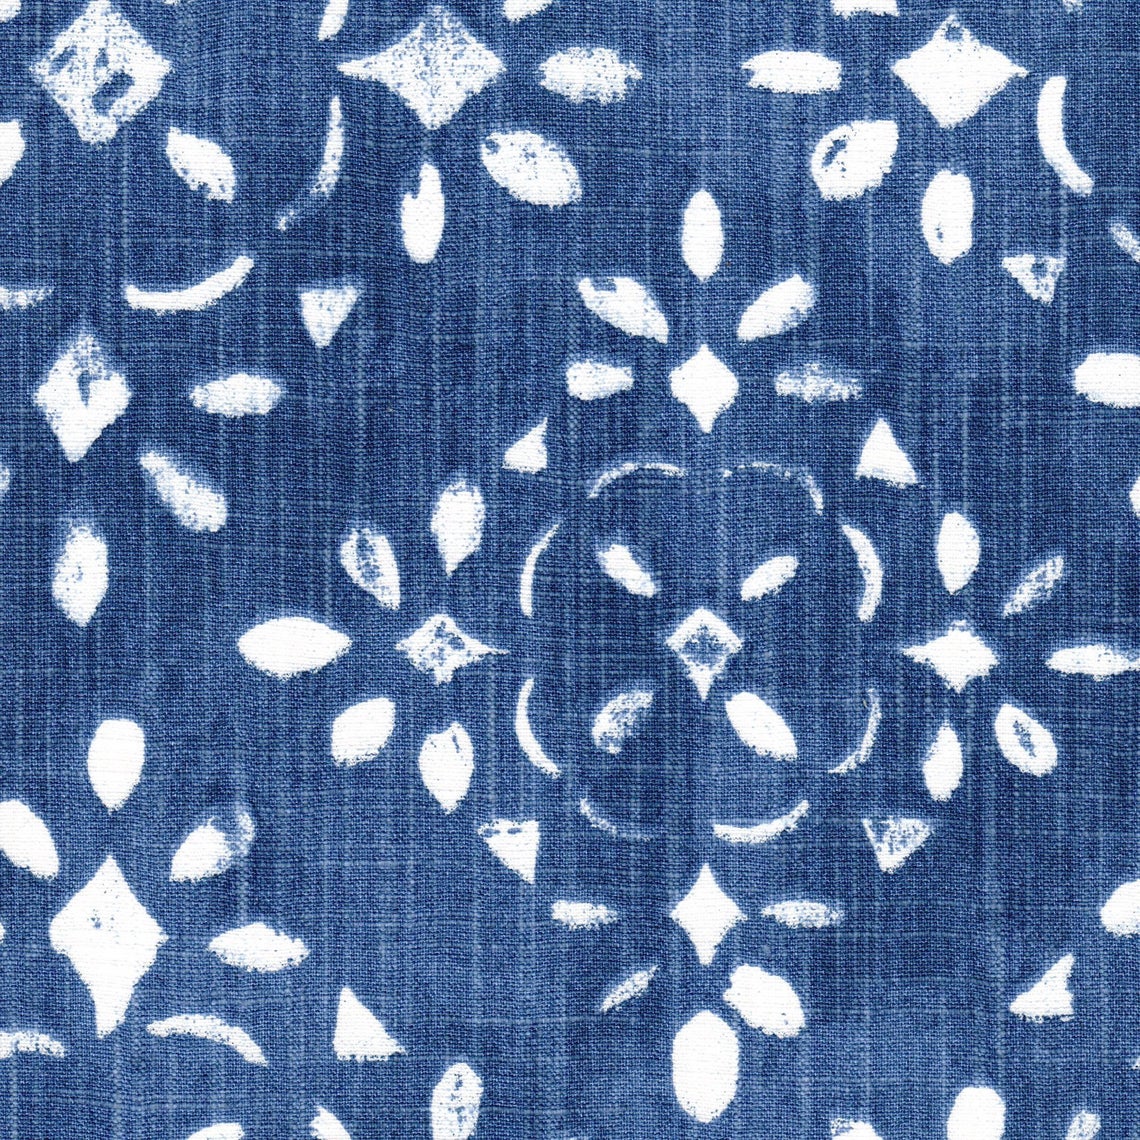 duvet cover in avila prussian blue farmhouse floral lattice